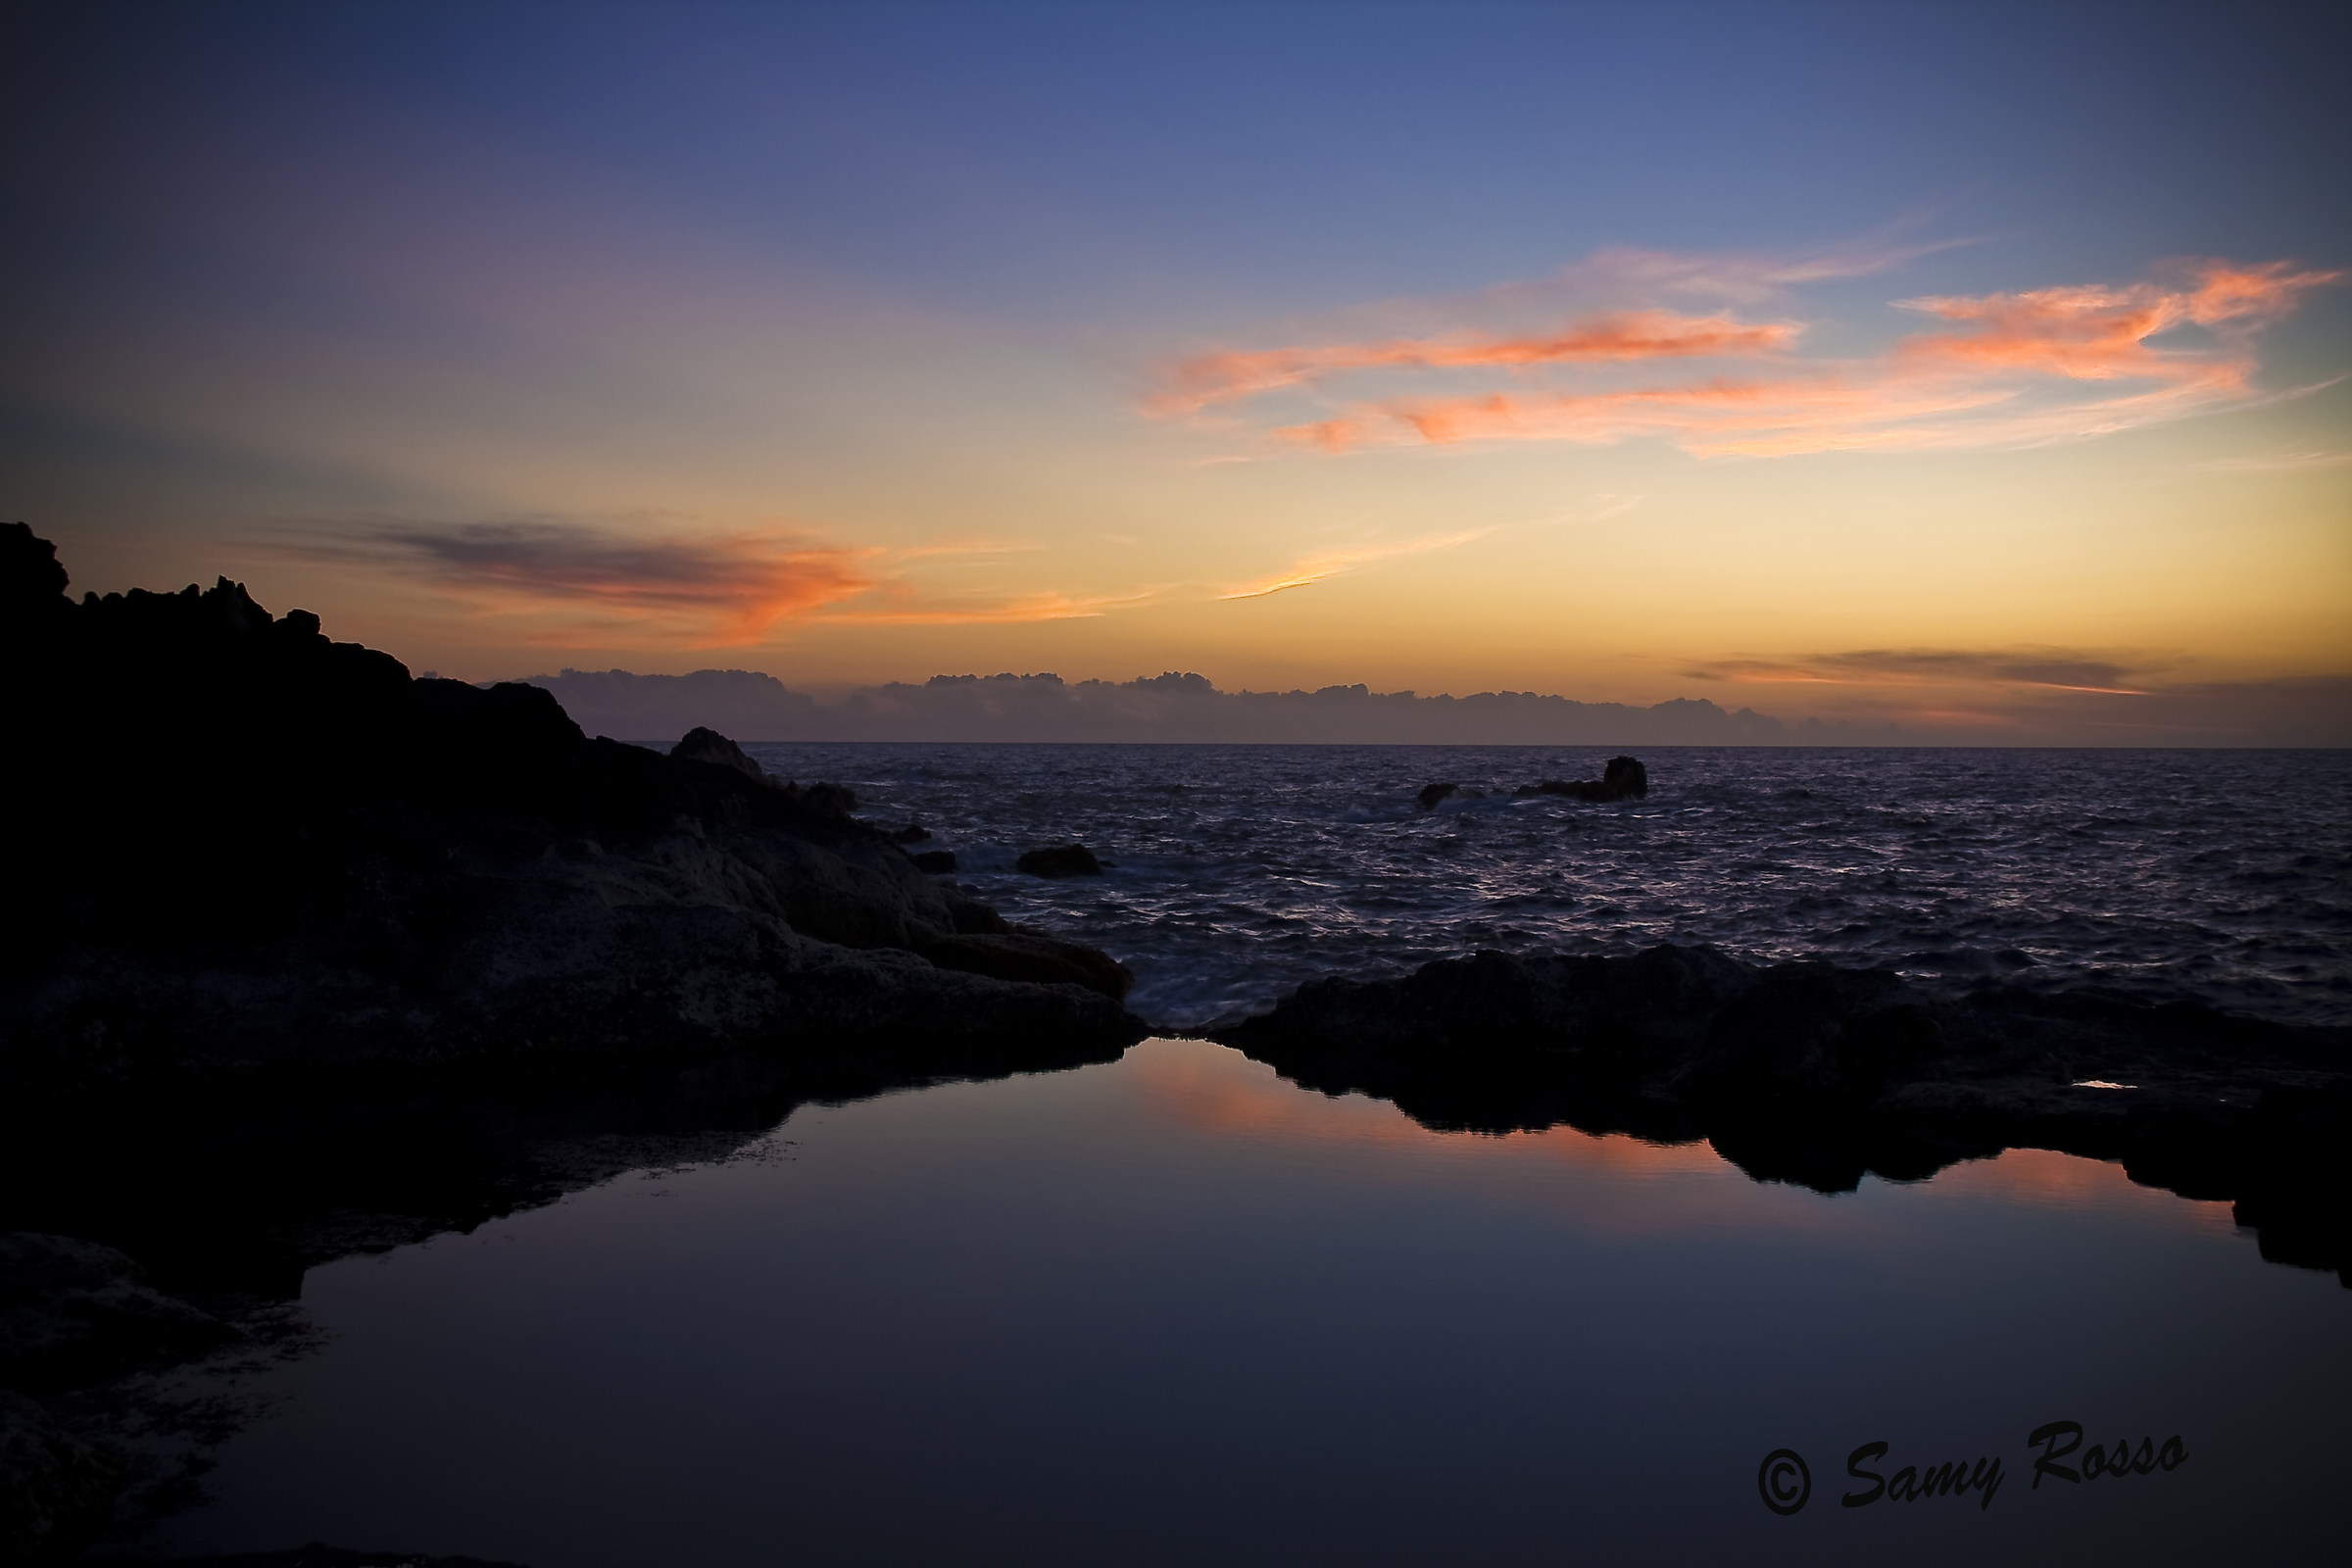 Reflection at sunset...